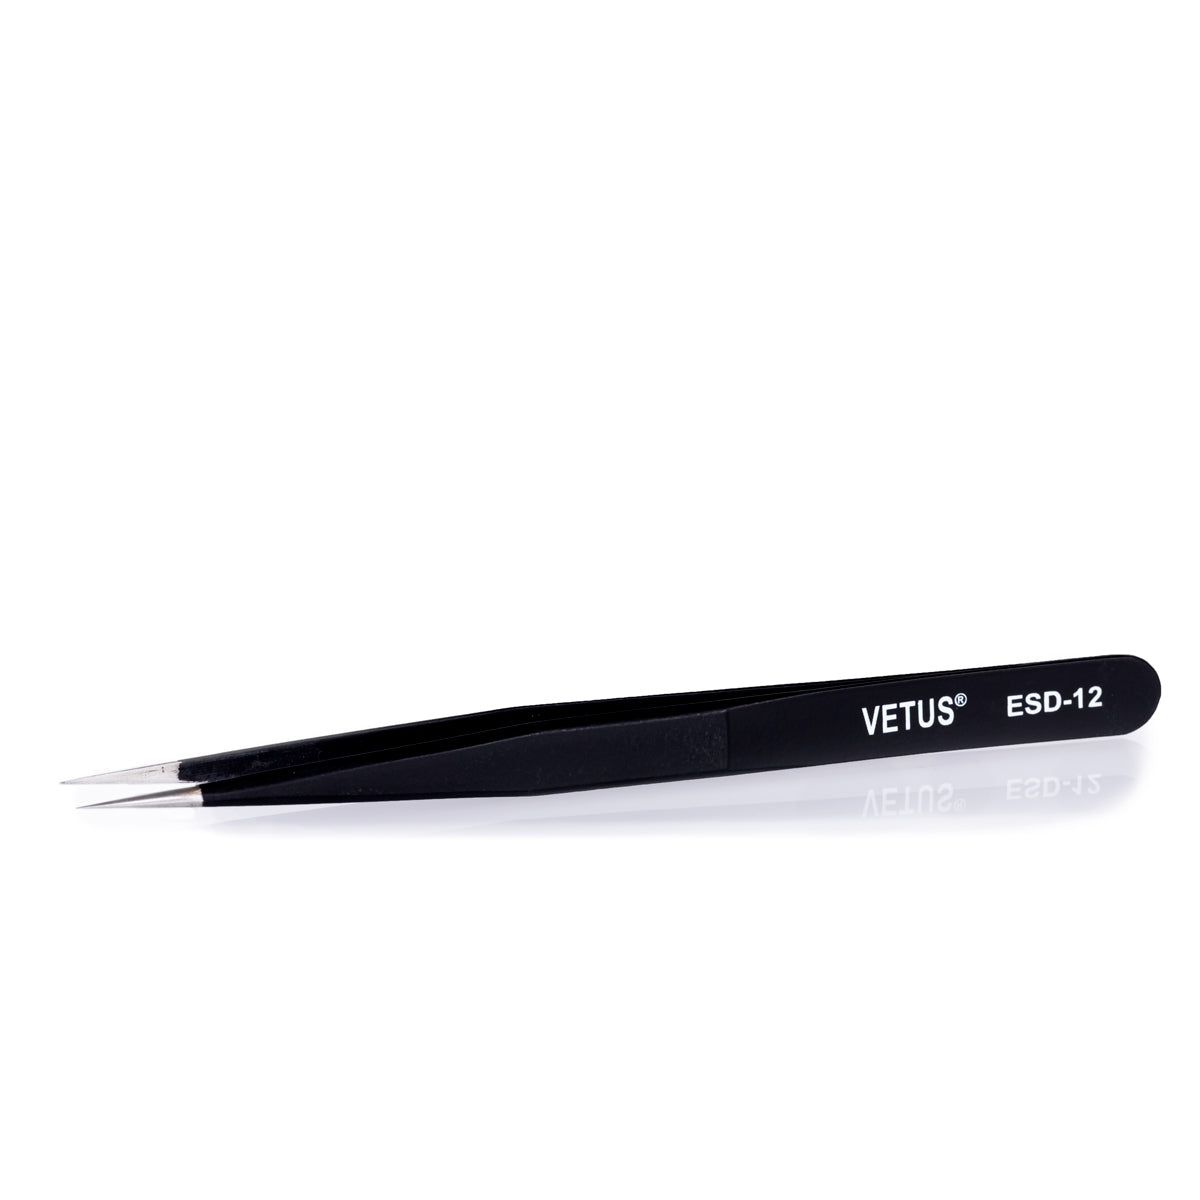 Vetus Tweezers - ESD 12 for Eyelash Extension Application